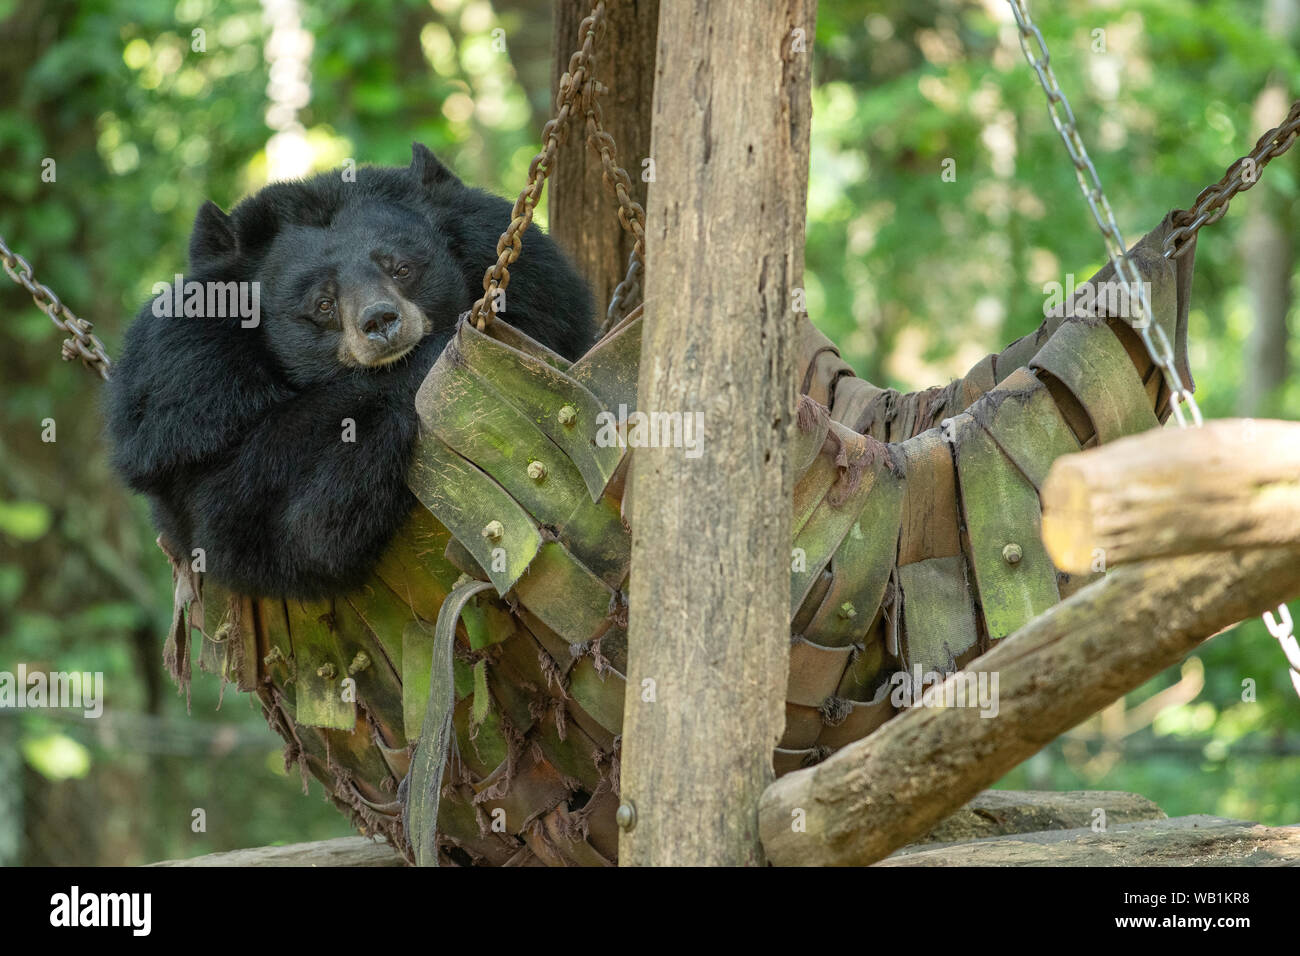 Asia, Asien, Southeast Asia, Laos, Luang Prabang, captive bear in zoo, 30078188 Stock Photo